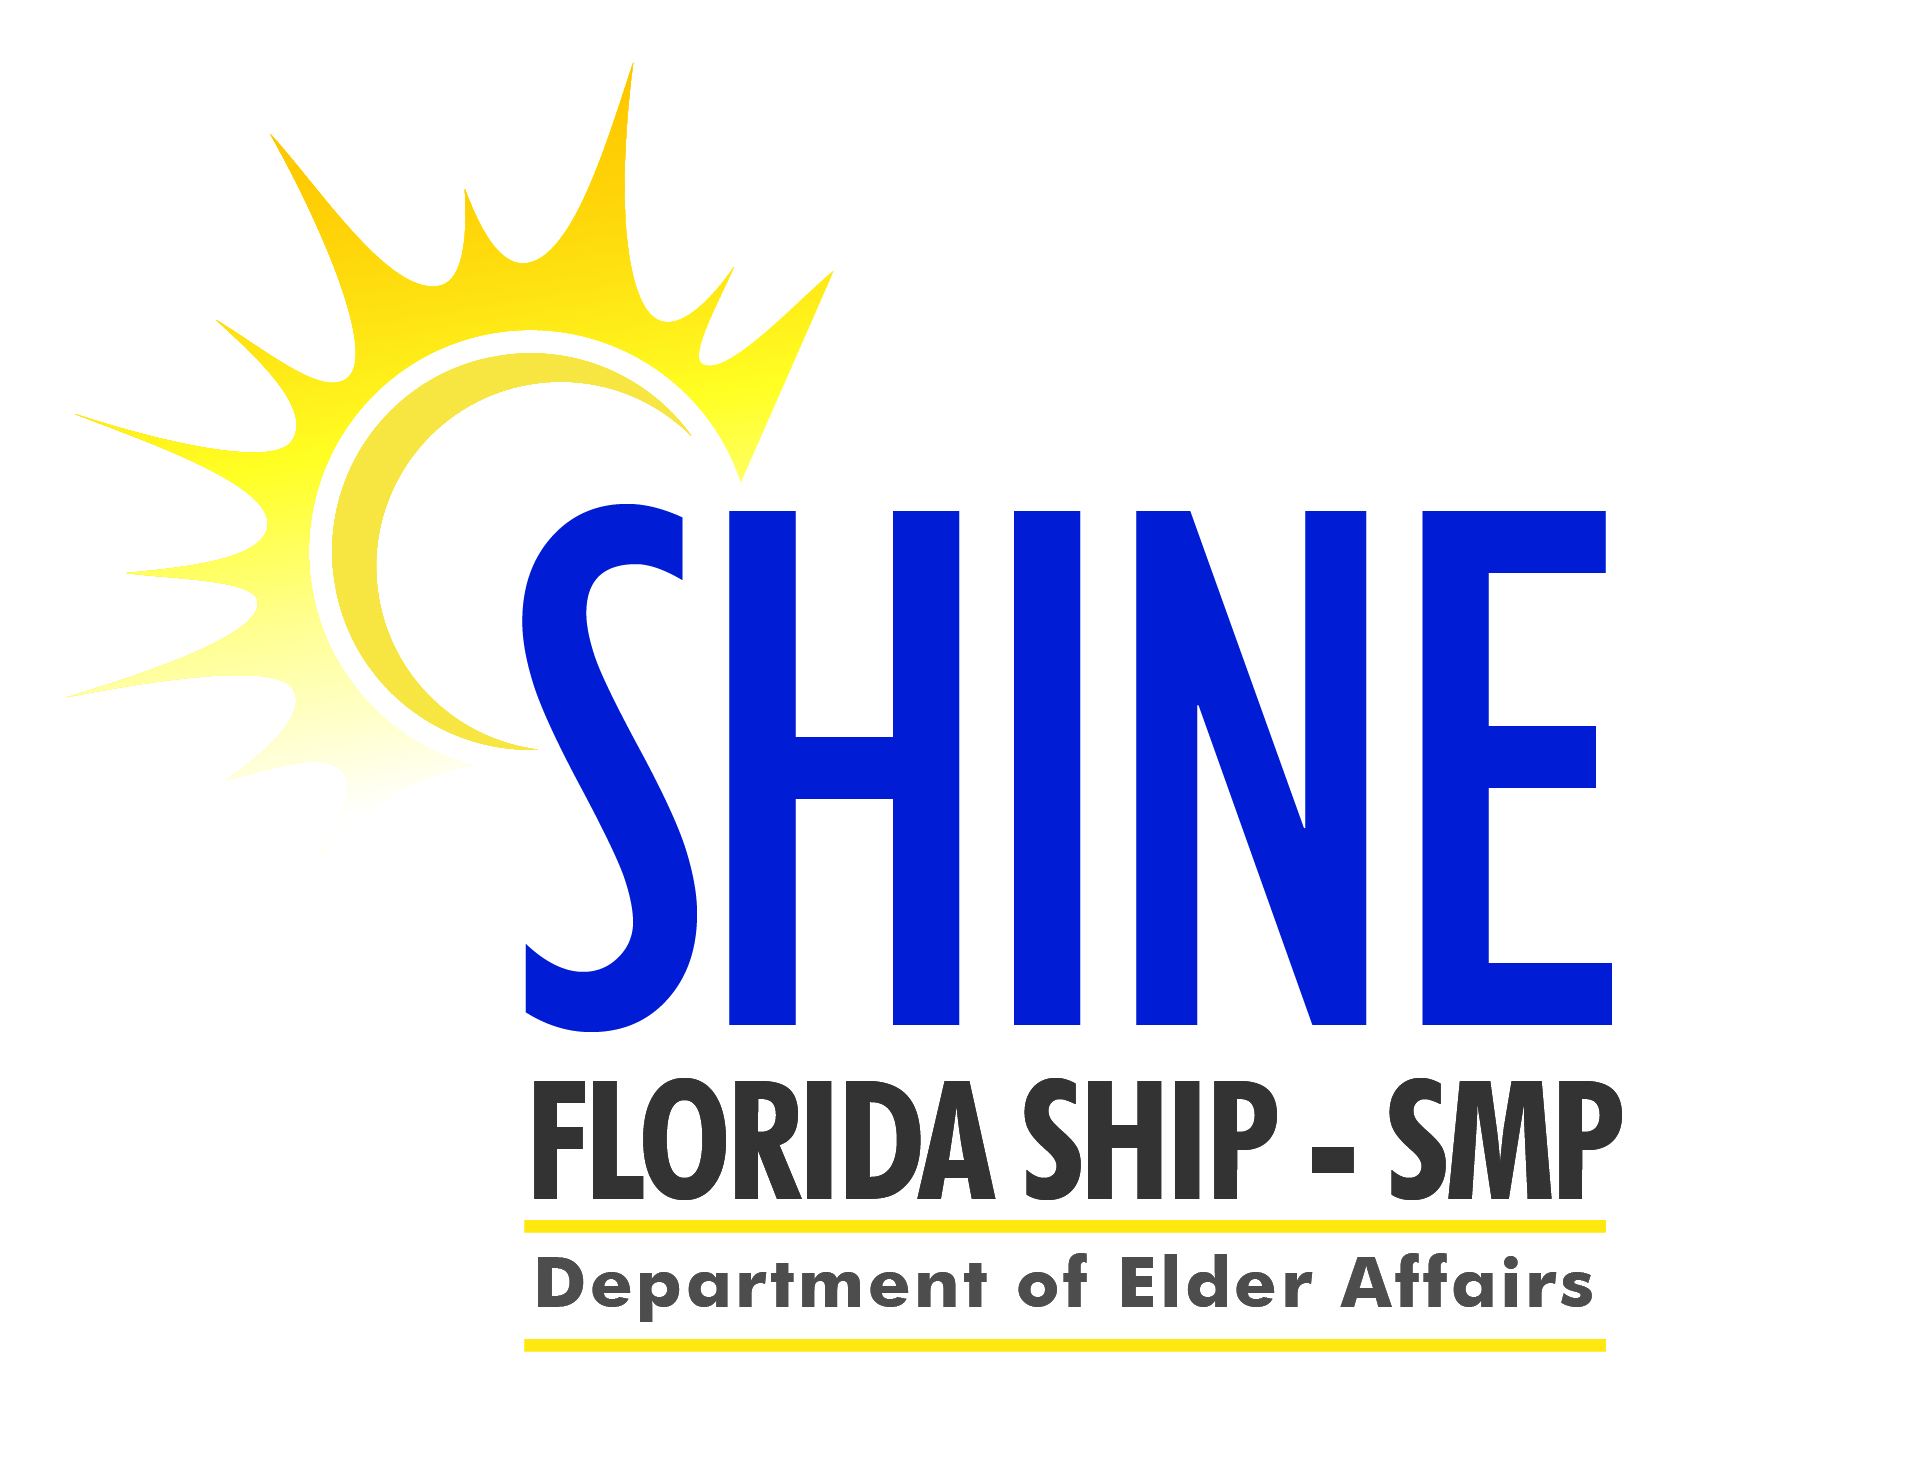 Contact Your SHIP - Florida